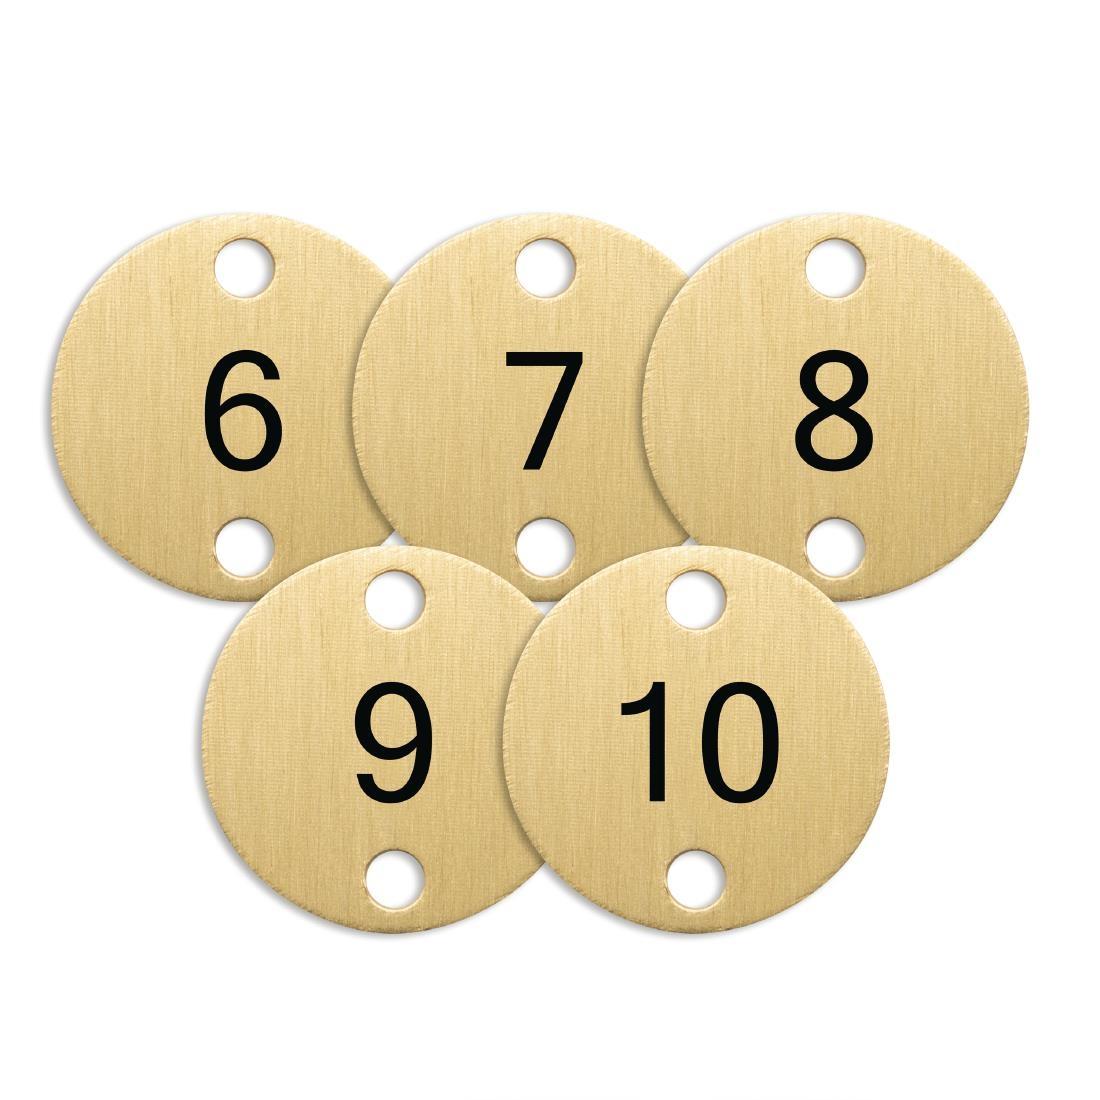 Bolero Table Numbers Bronze (6-10) - DY775  - 3